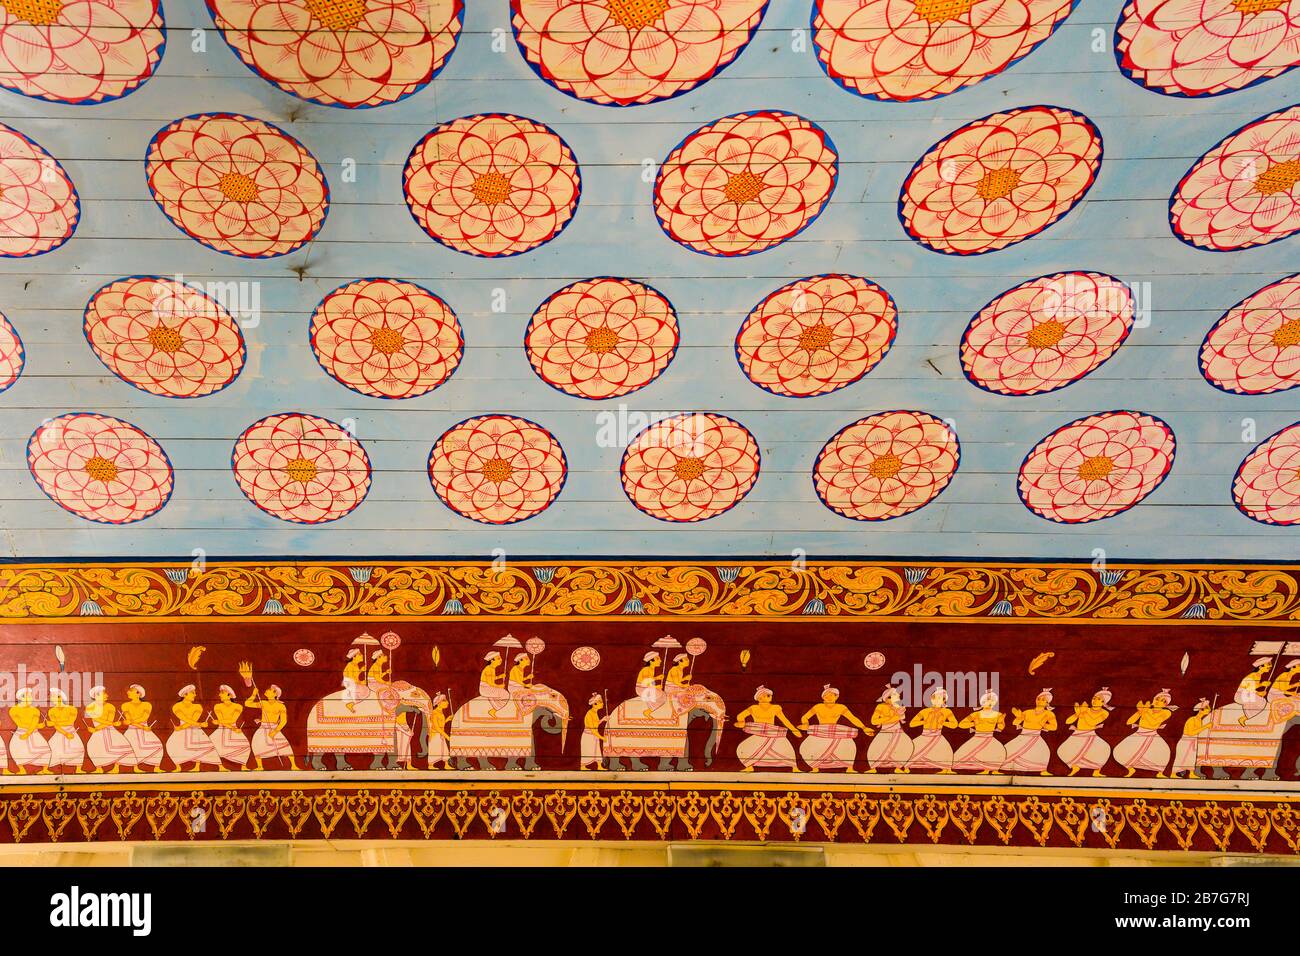 Asia Sri Lanka Kandy Sinhala Central Province ancient capital Sri Dalada Maligawa Temple of the Sacred Tooth Relic Buddhist Buddhism ceiling detail Stock Photo